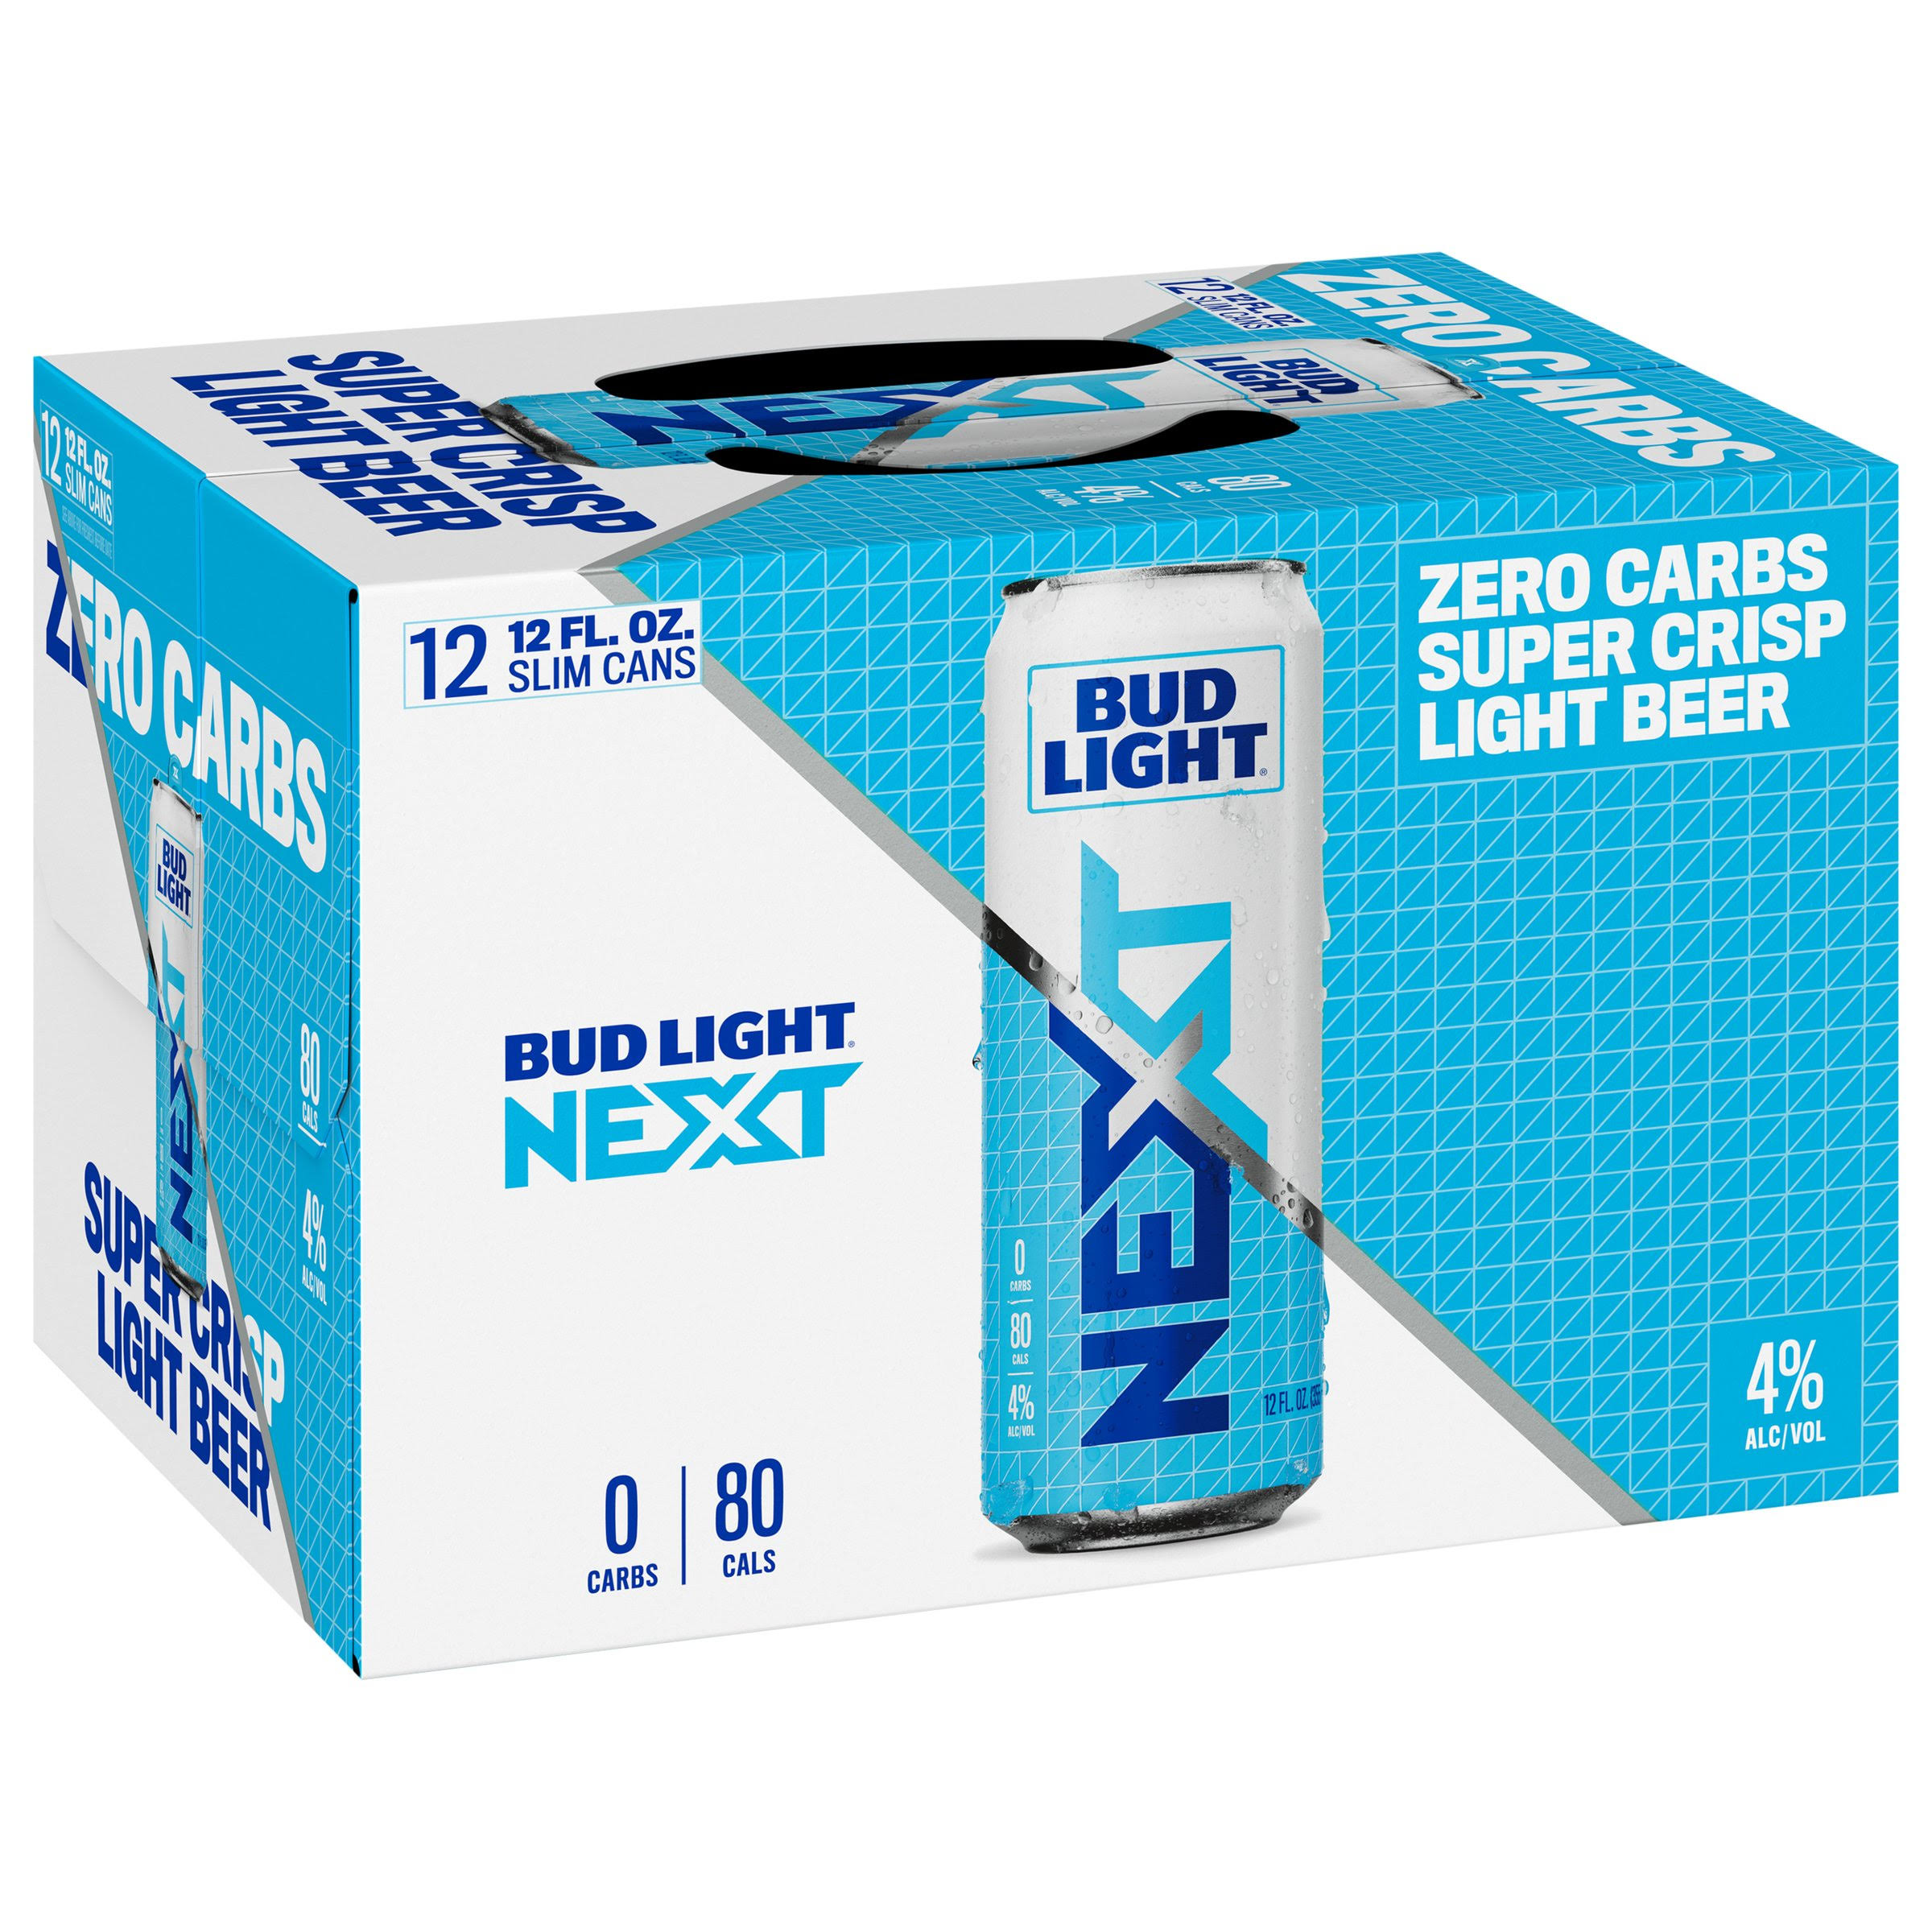 Bud Light Next Beer, Light, Zero Carbs, Super Crisp - 12 pack, 12 fl oz slim cans